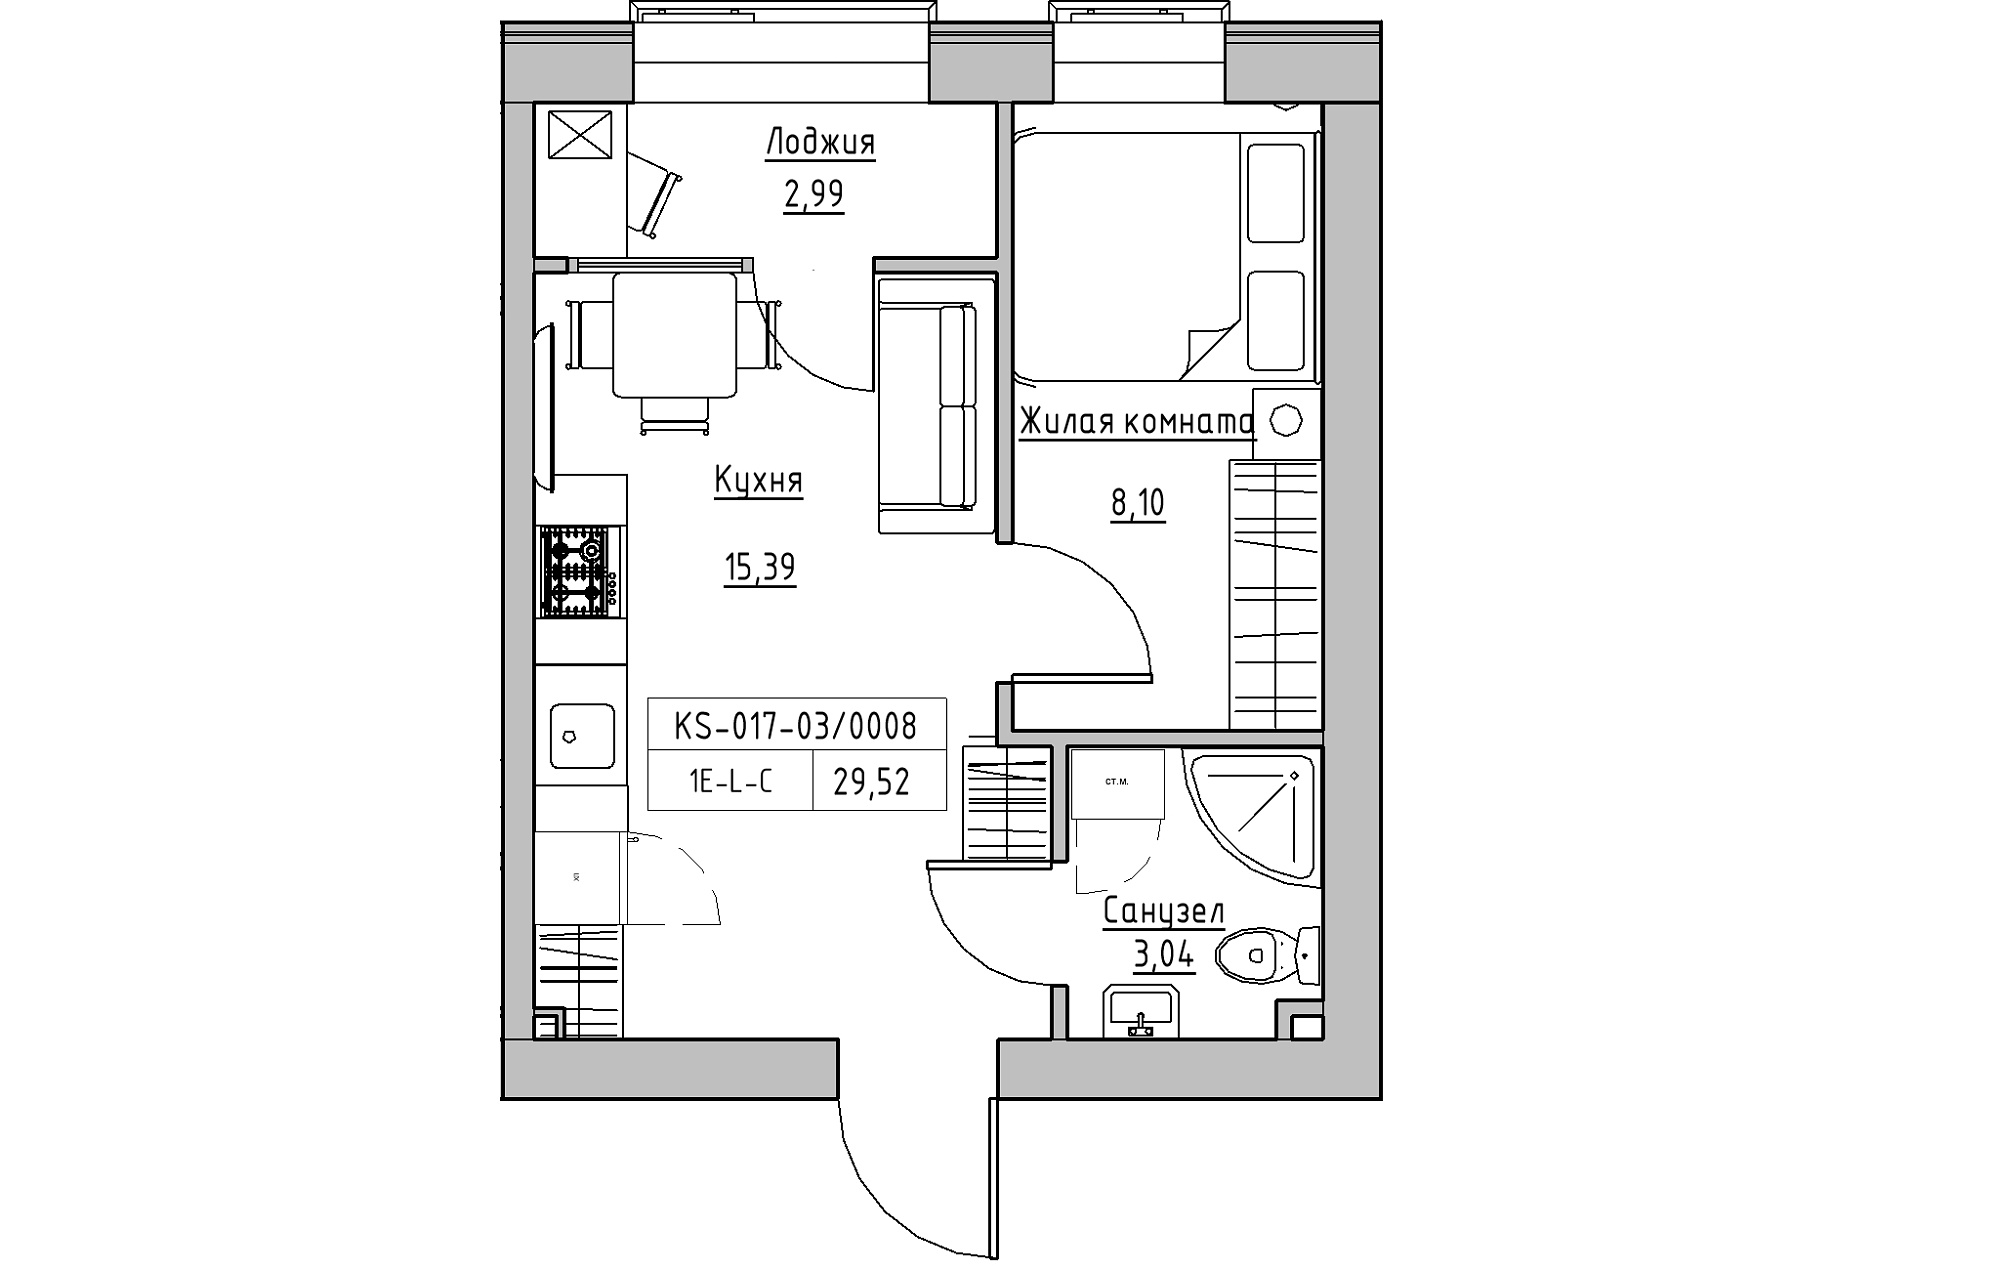 Planning 1-rm flats area 29.52m2, KS-017-03/0008.